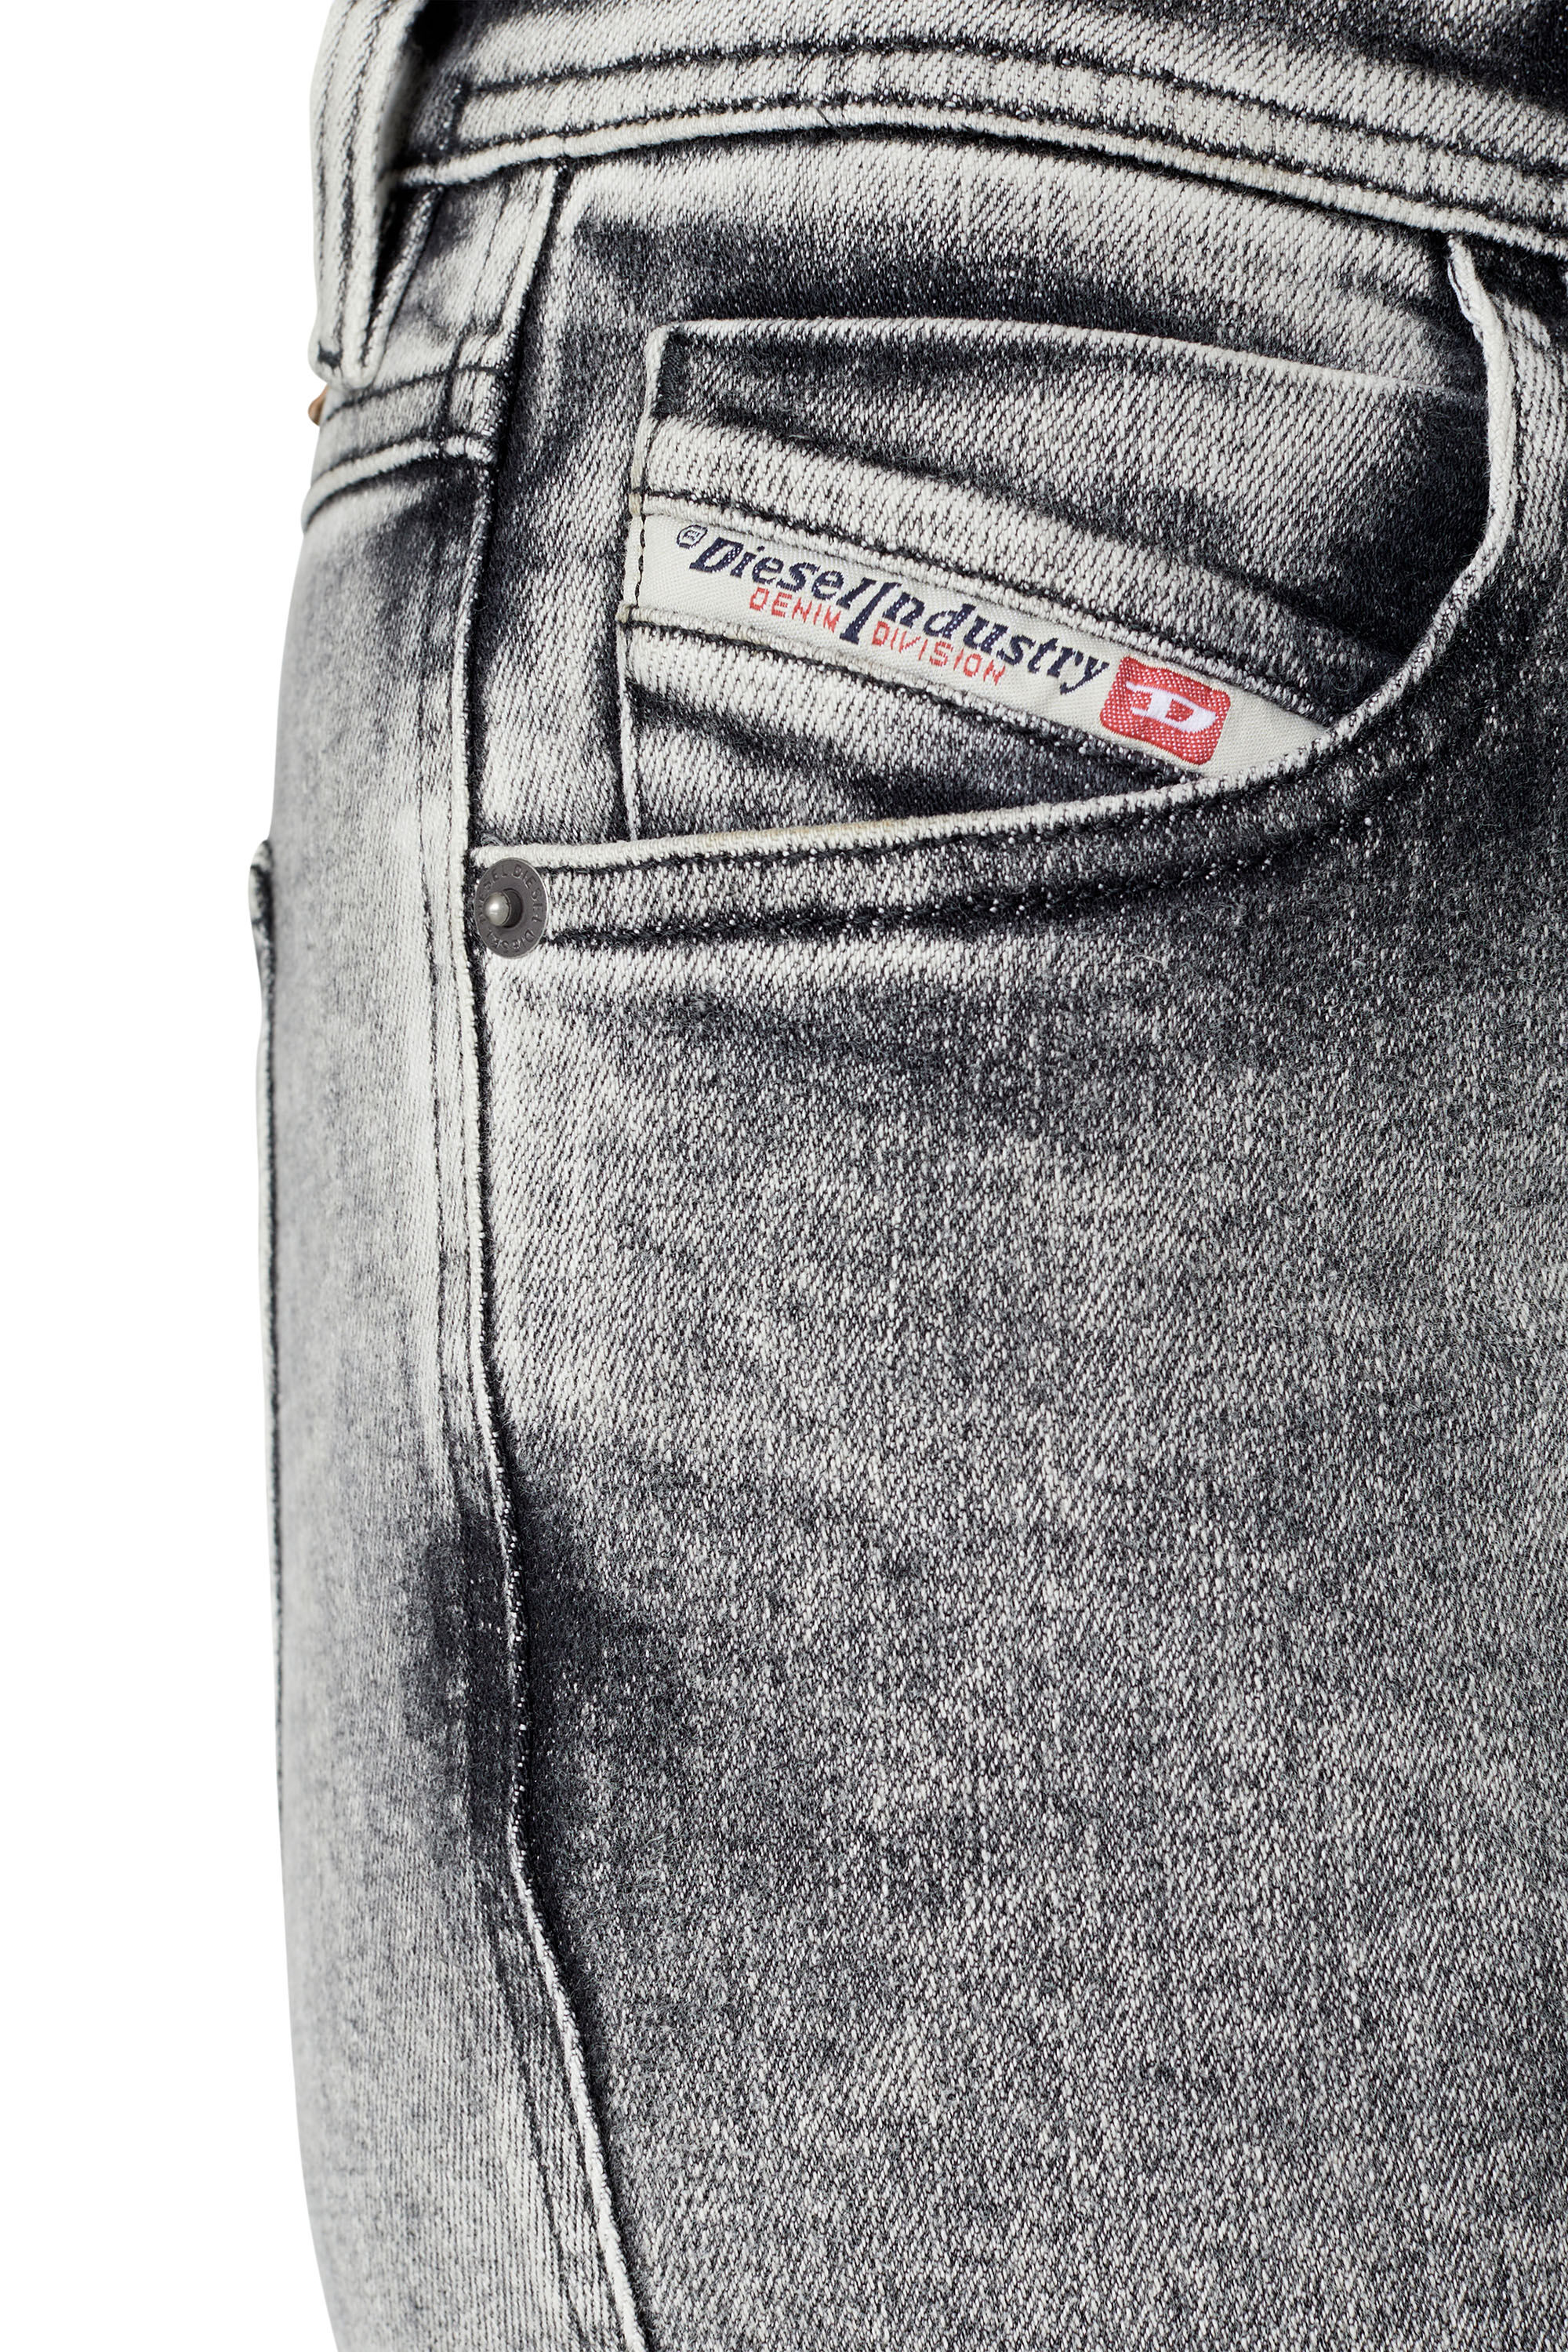 Women's Skinny Jeans | Light grey | Diesel 2015 Babhila